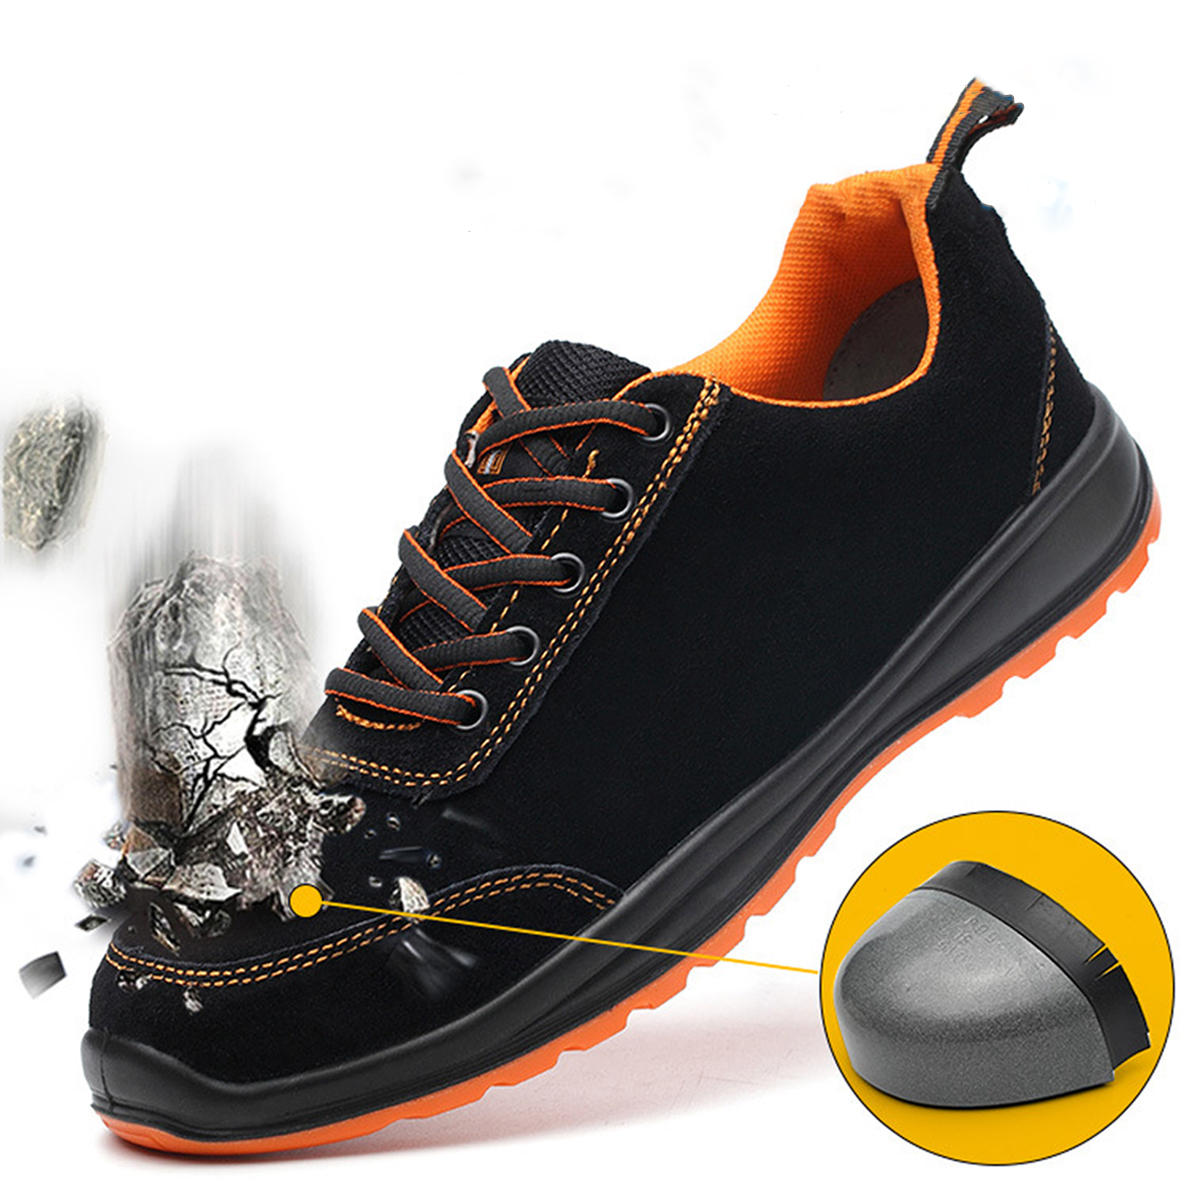 TENGOO Men's Safety Shoes Steel Toe Work Sneakers Slip Resistant Waterproof Breathable Hiking Climbing Running Shoes 